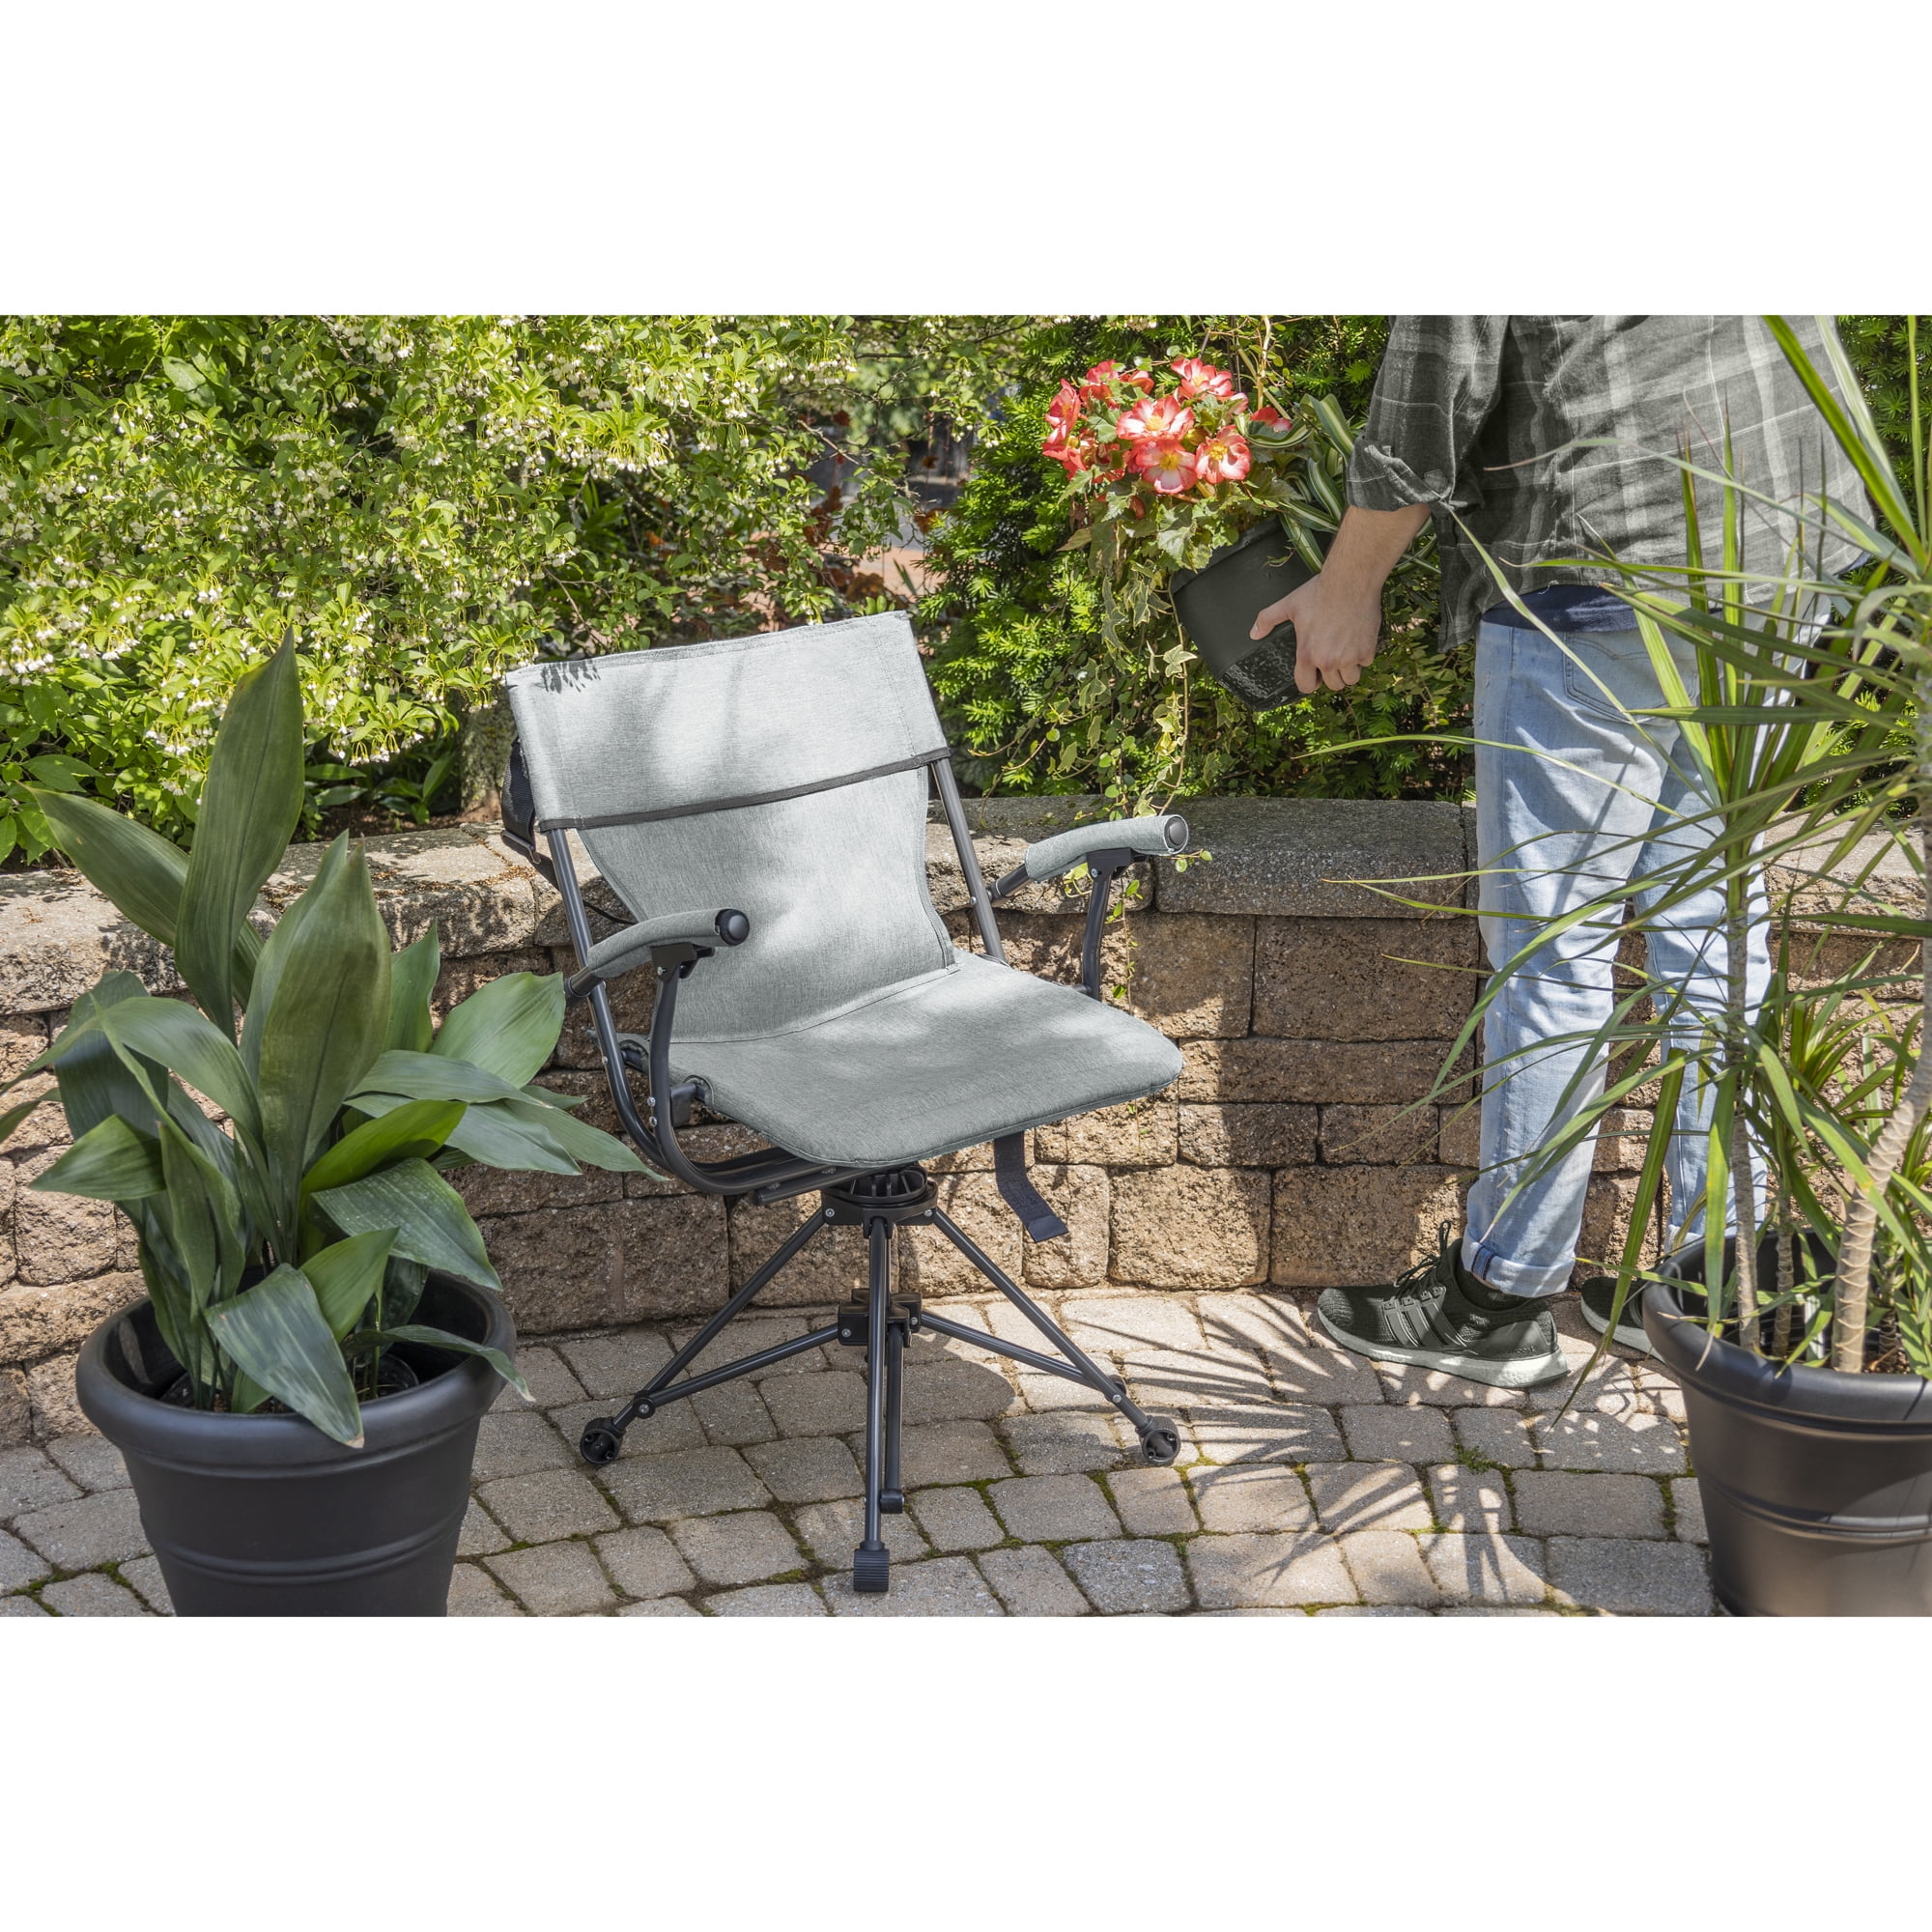 Zenithen Outdoor 360 Degree Portable Lawn Swivel Camping Bag Chair